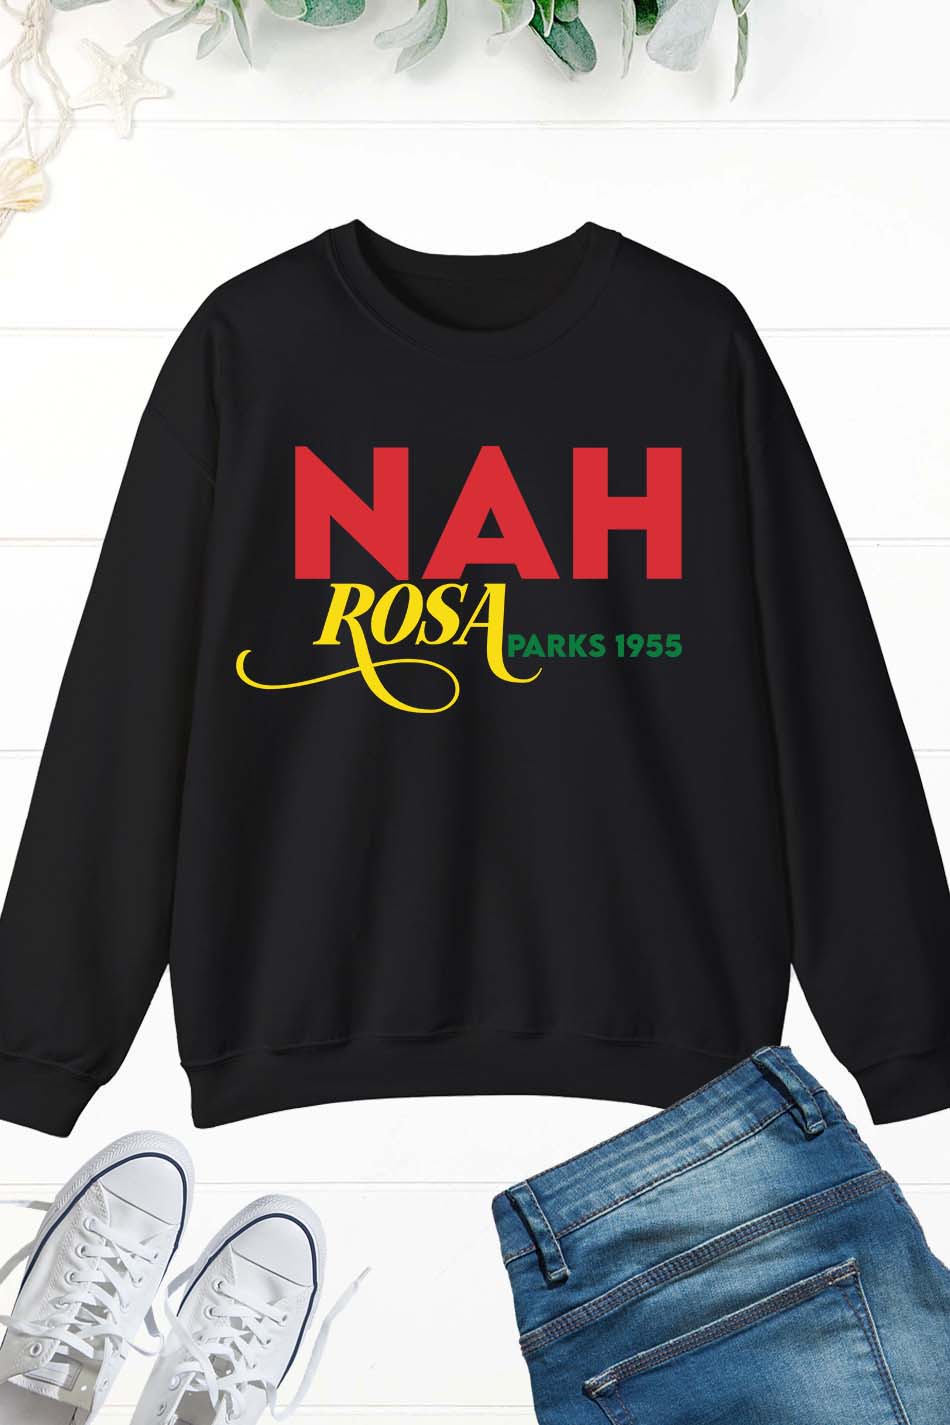 Nah Rosa Parks 1955 Black History Sweatshirt